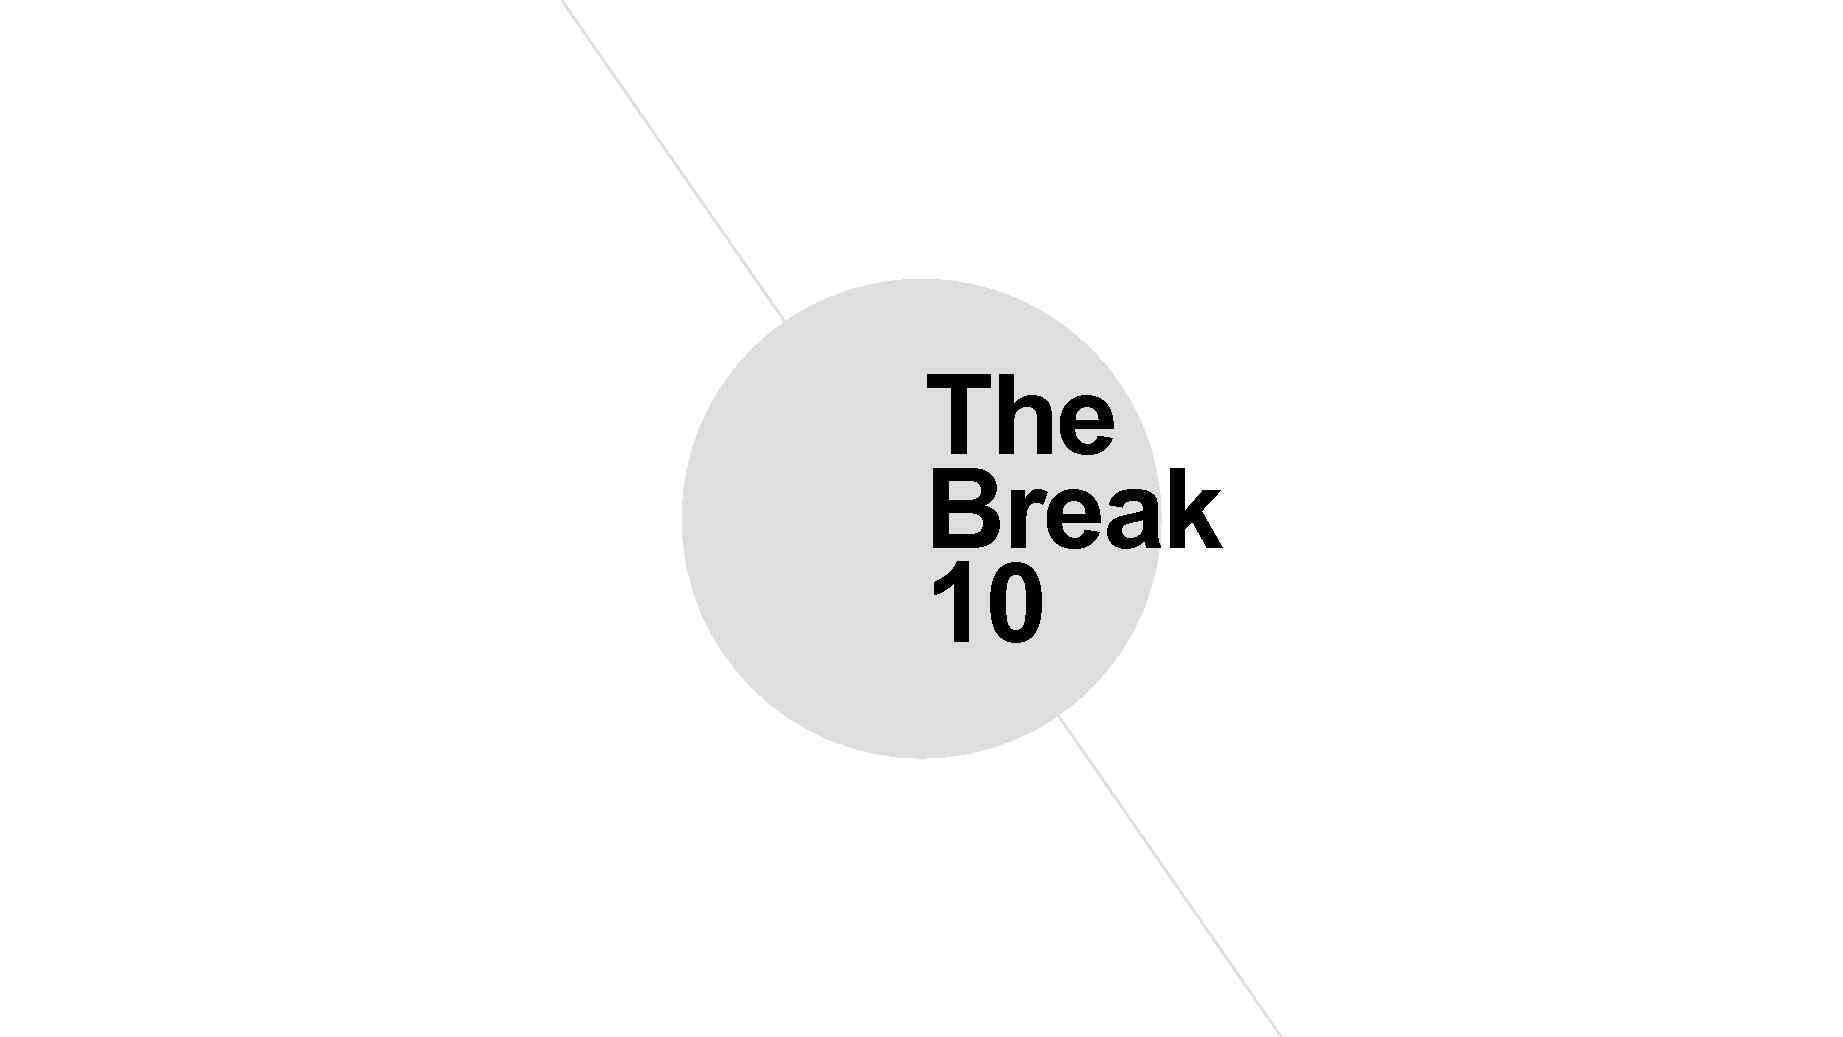 The Break 10 